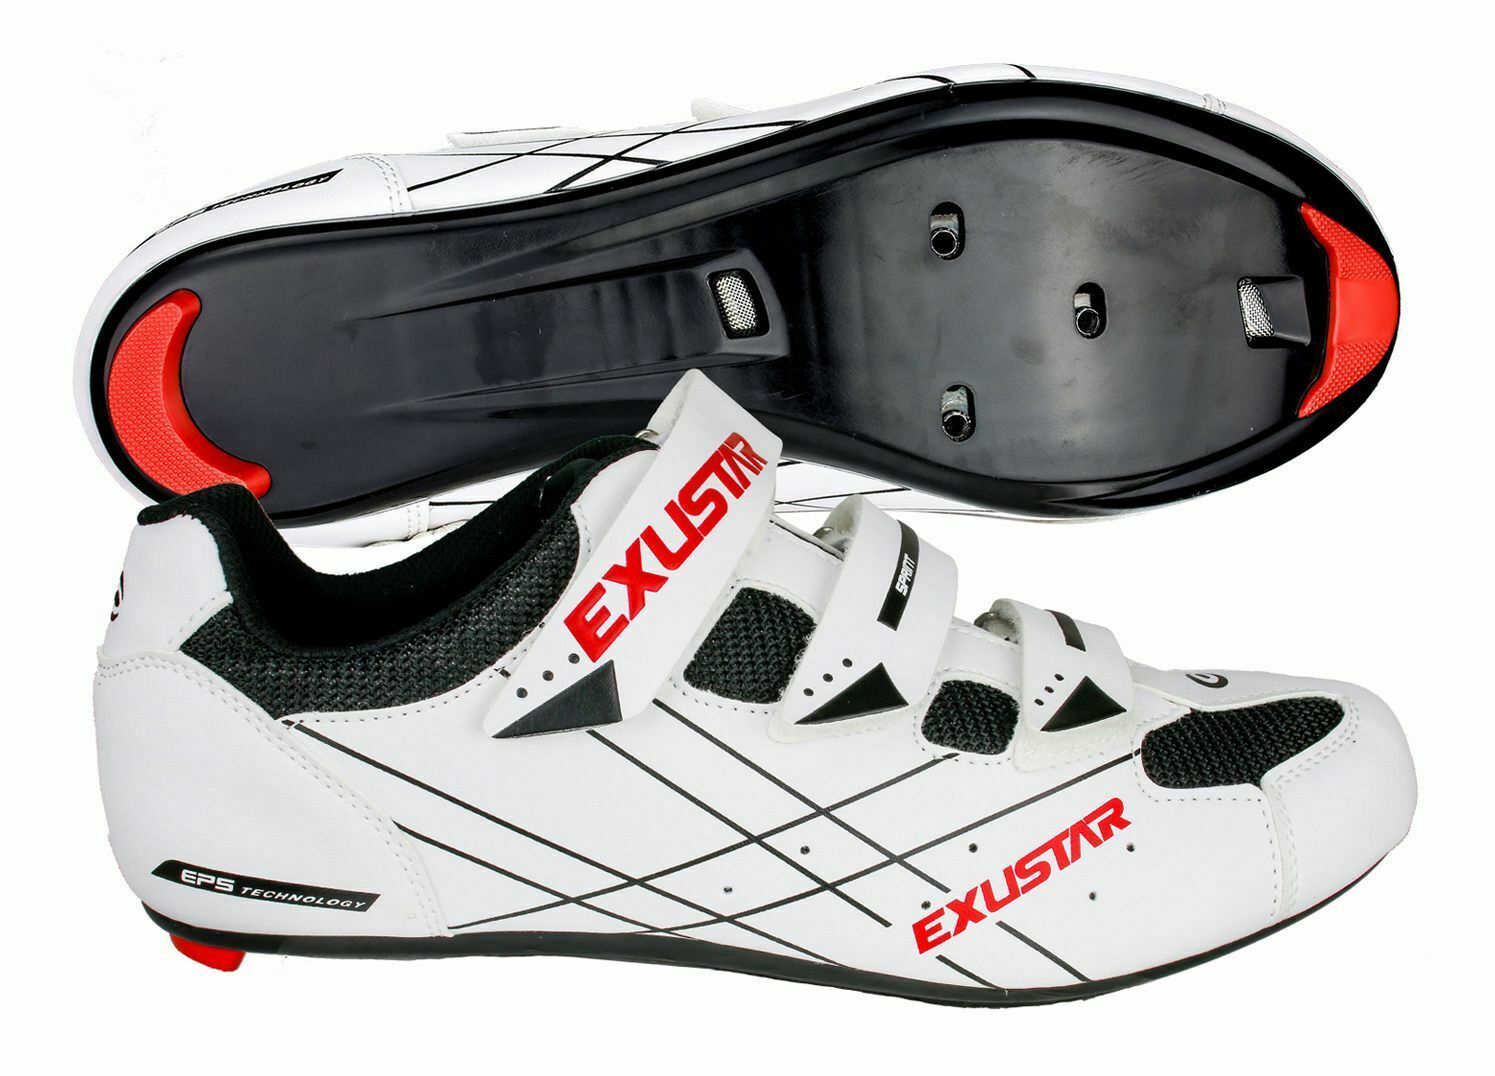 E-SR493 Road Bike Shoes Size 46